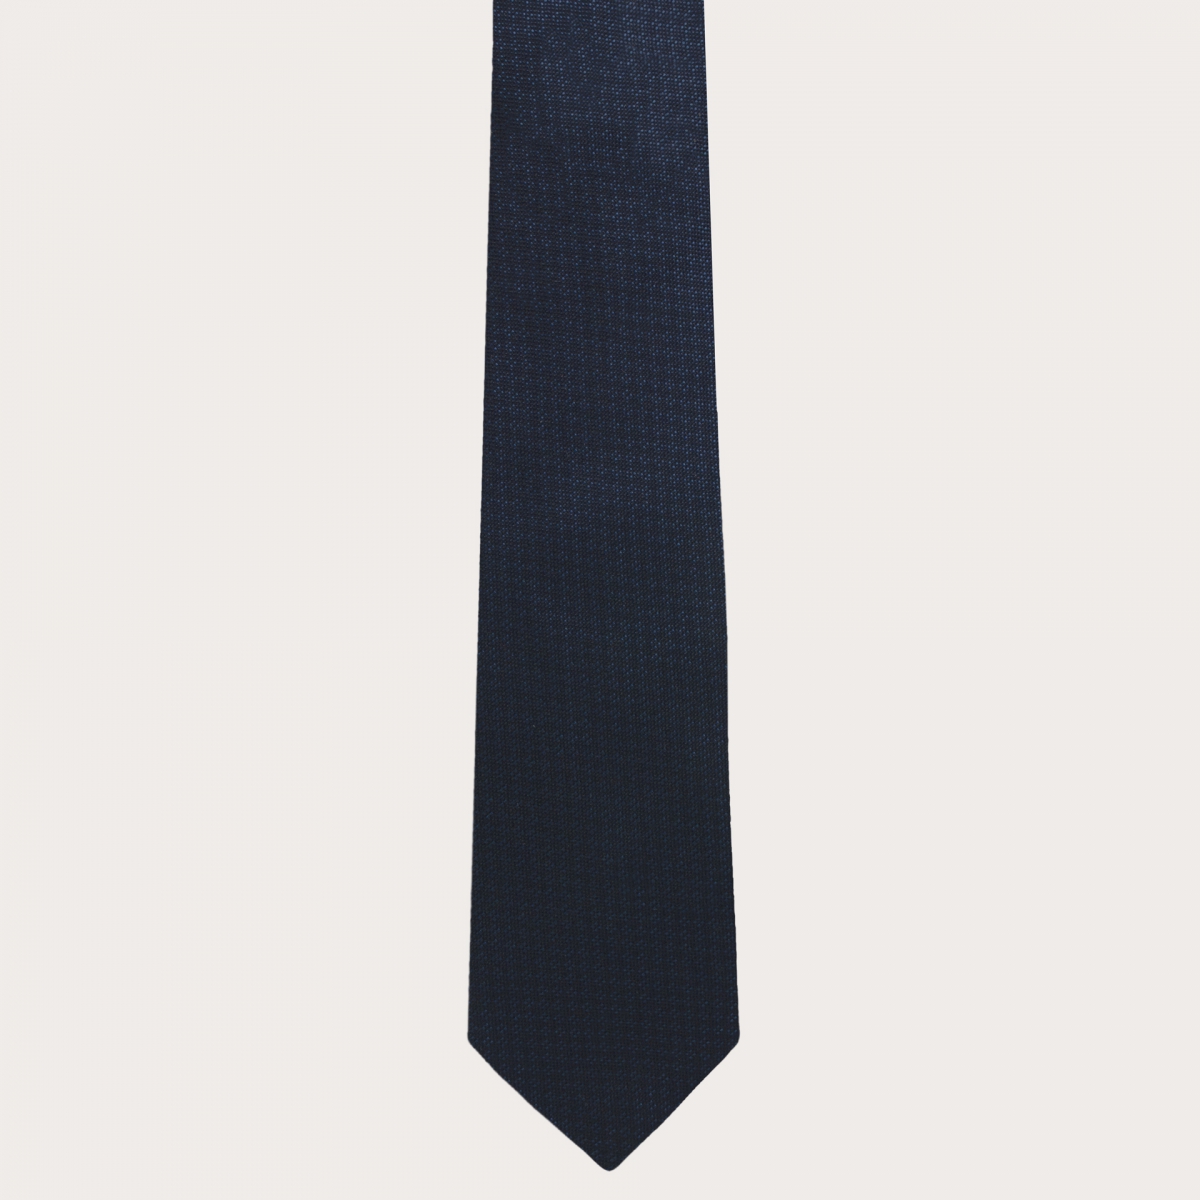 Elegante Krawatte aus Jacquard-Seide, blaues Mikromuster